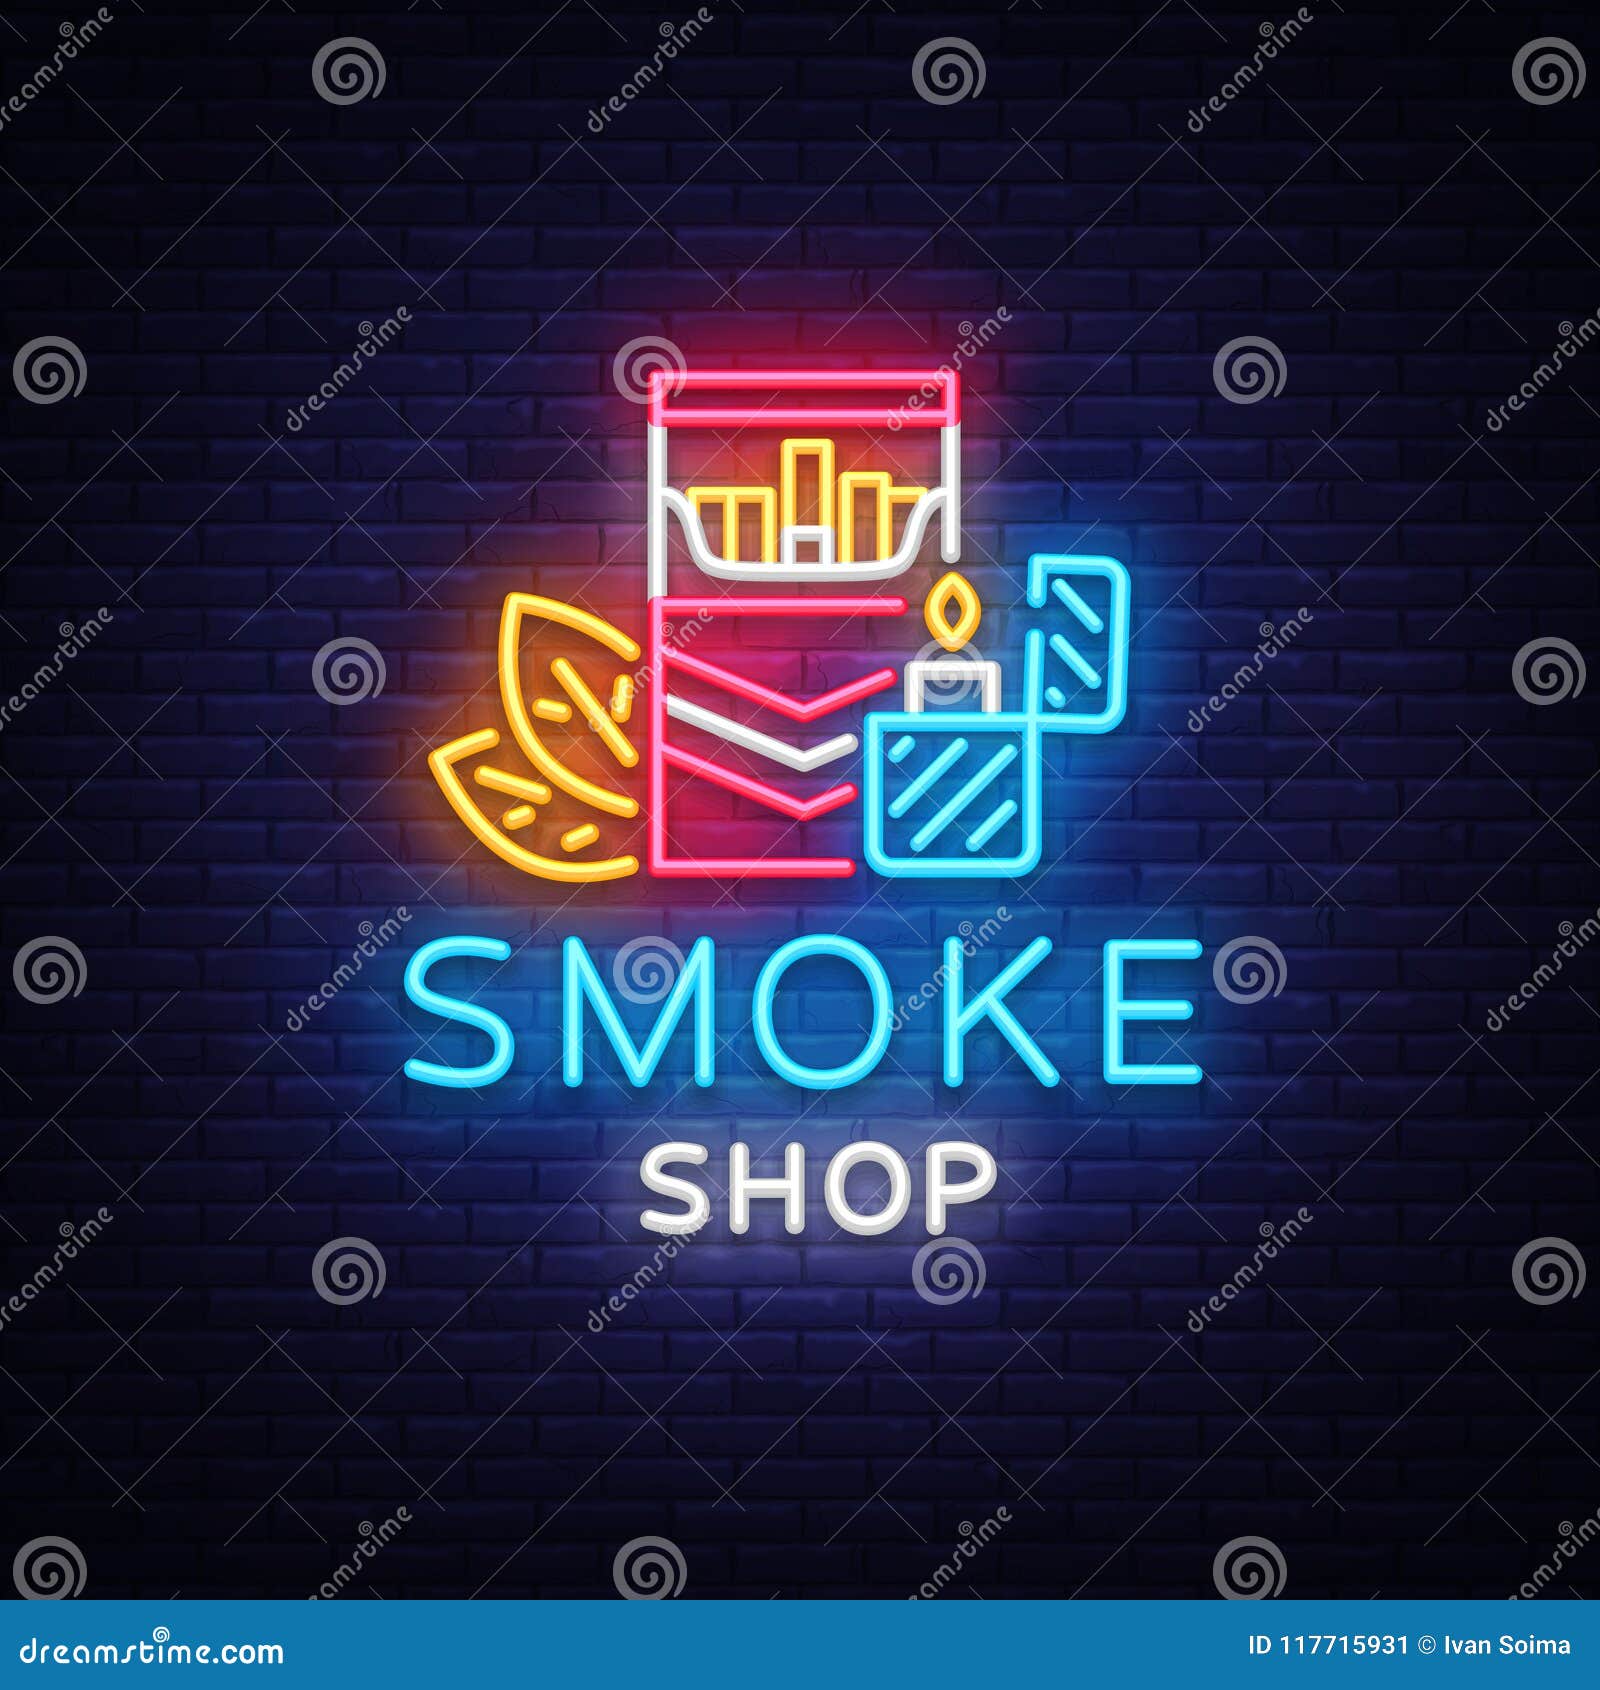 smoke shop logo ideas 3